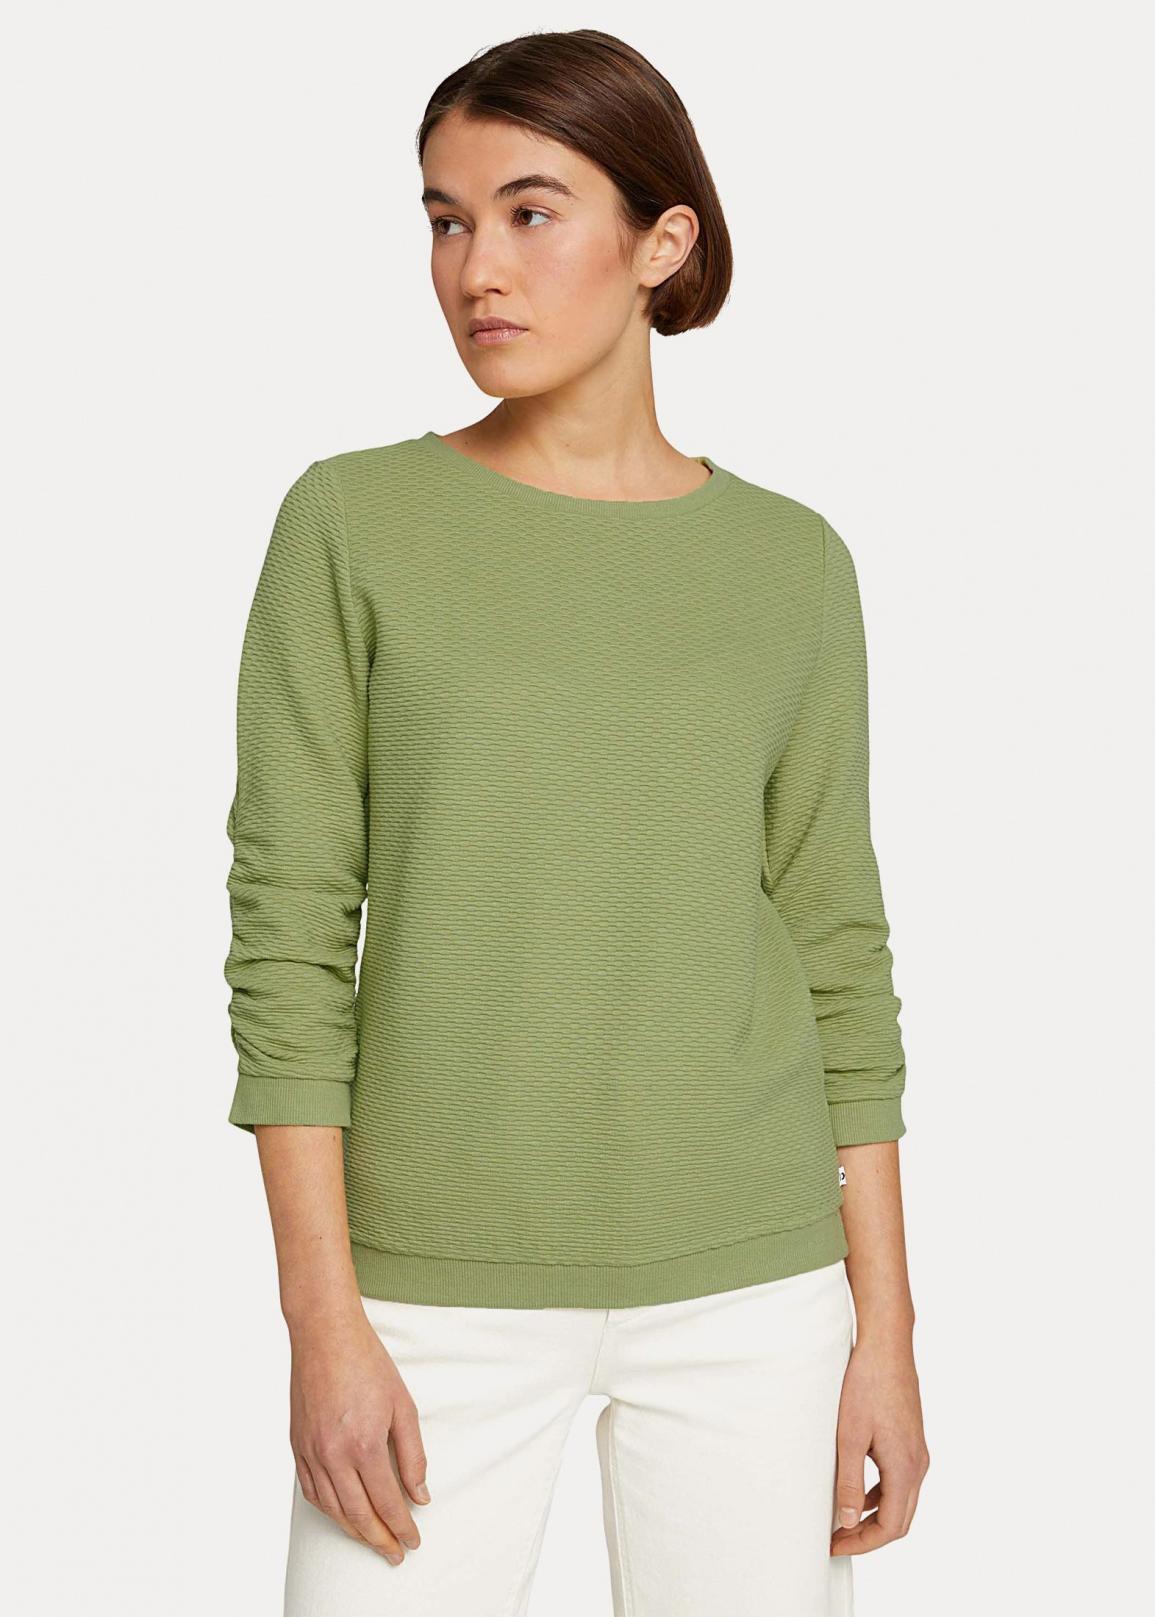 Denim Tom Tailor® Sweater - New Pea Green